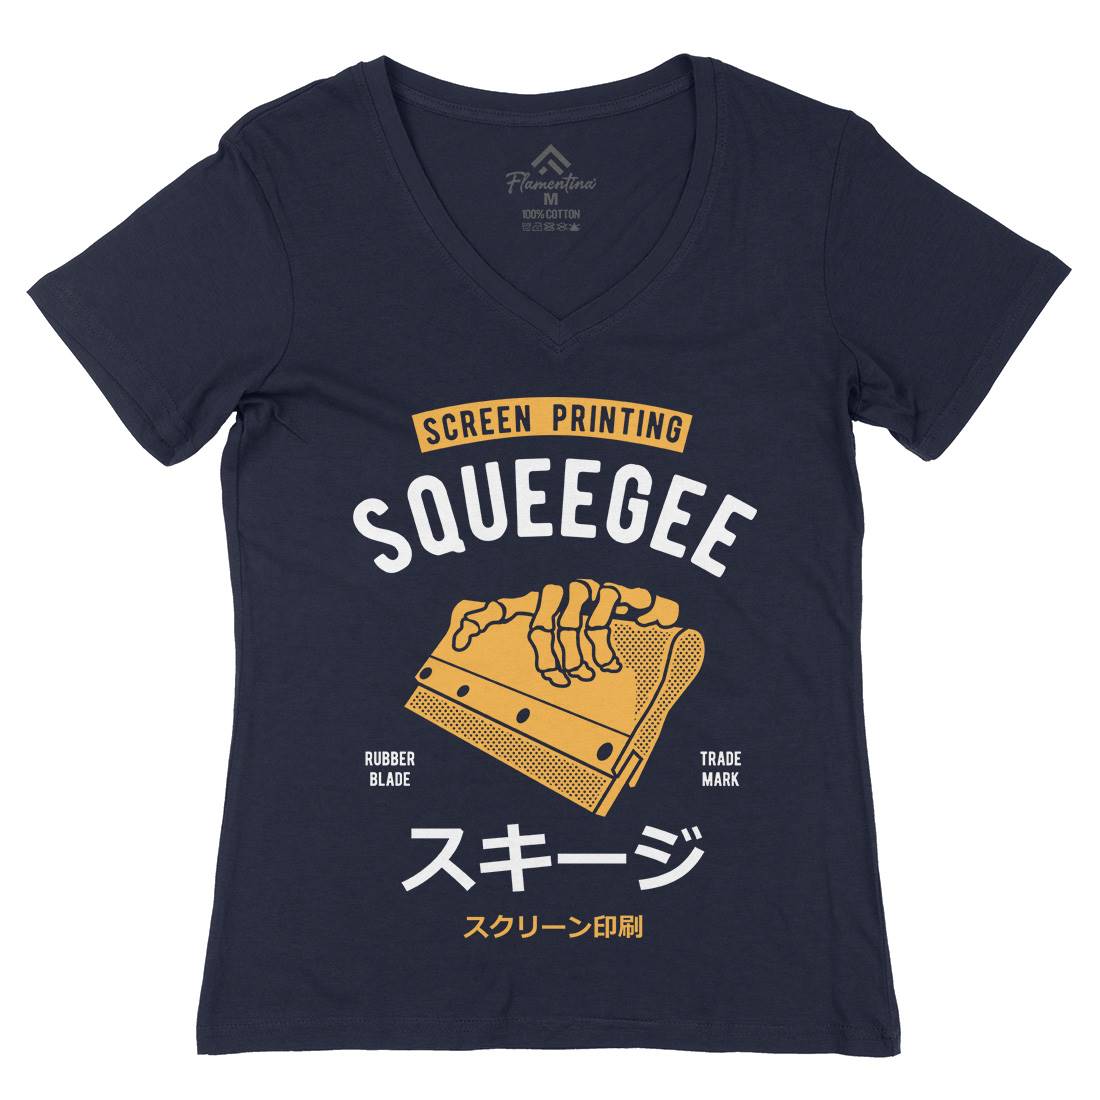 Squeegee Social Club Womens Organic V-Neck T-Shirt Work A282